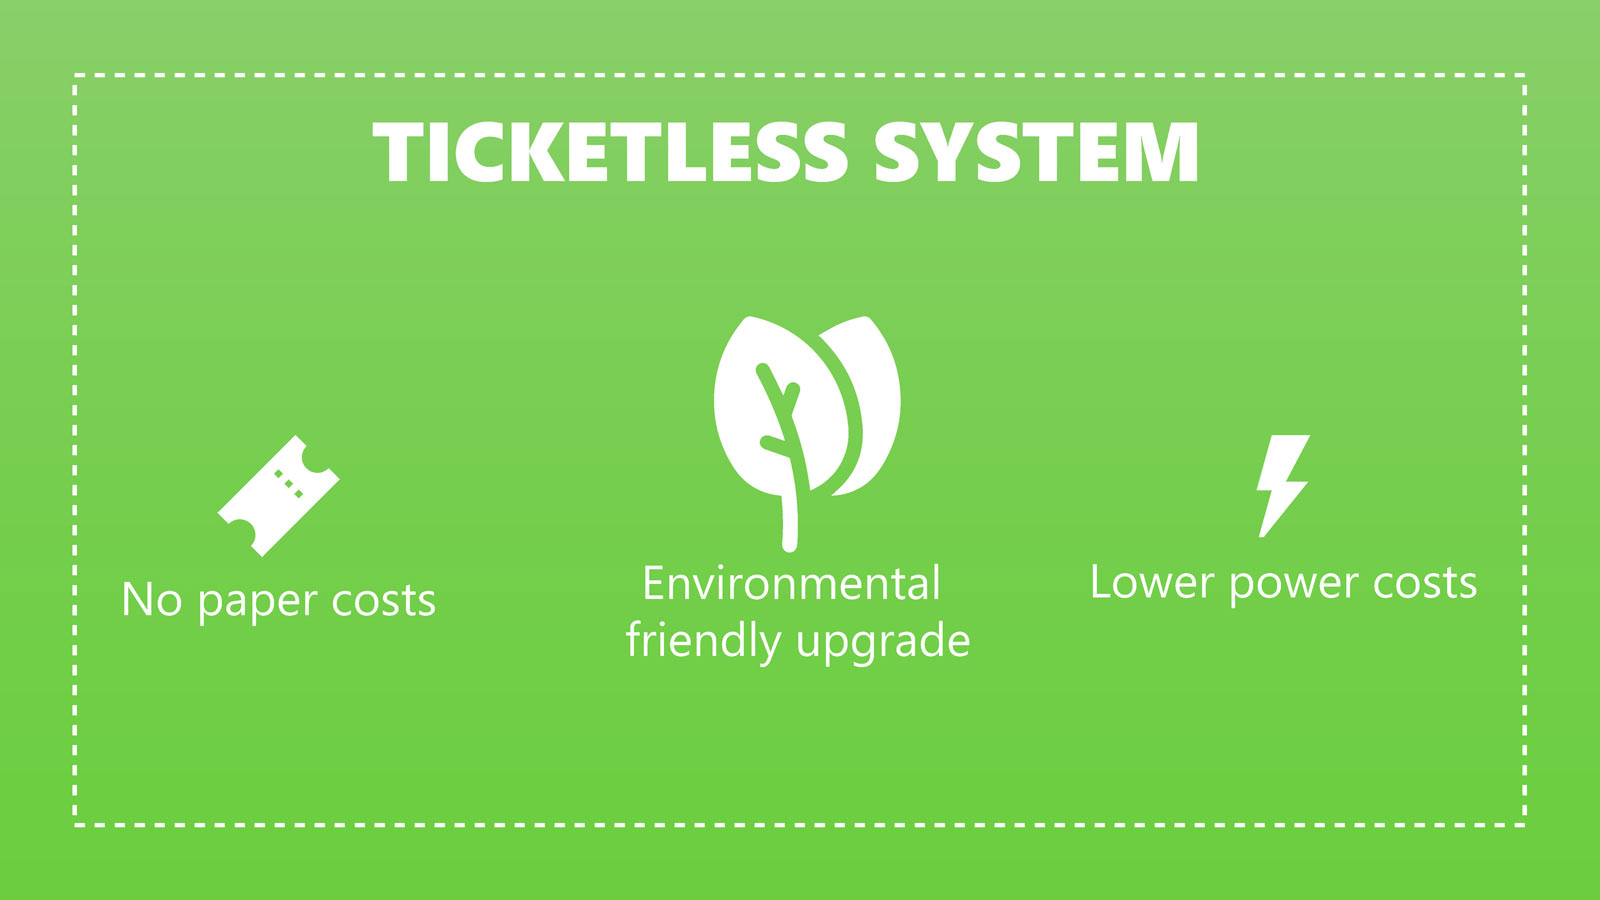 Ticketless system